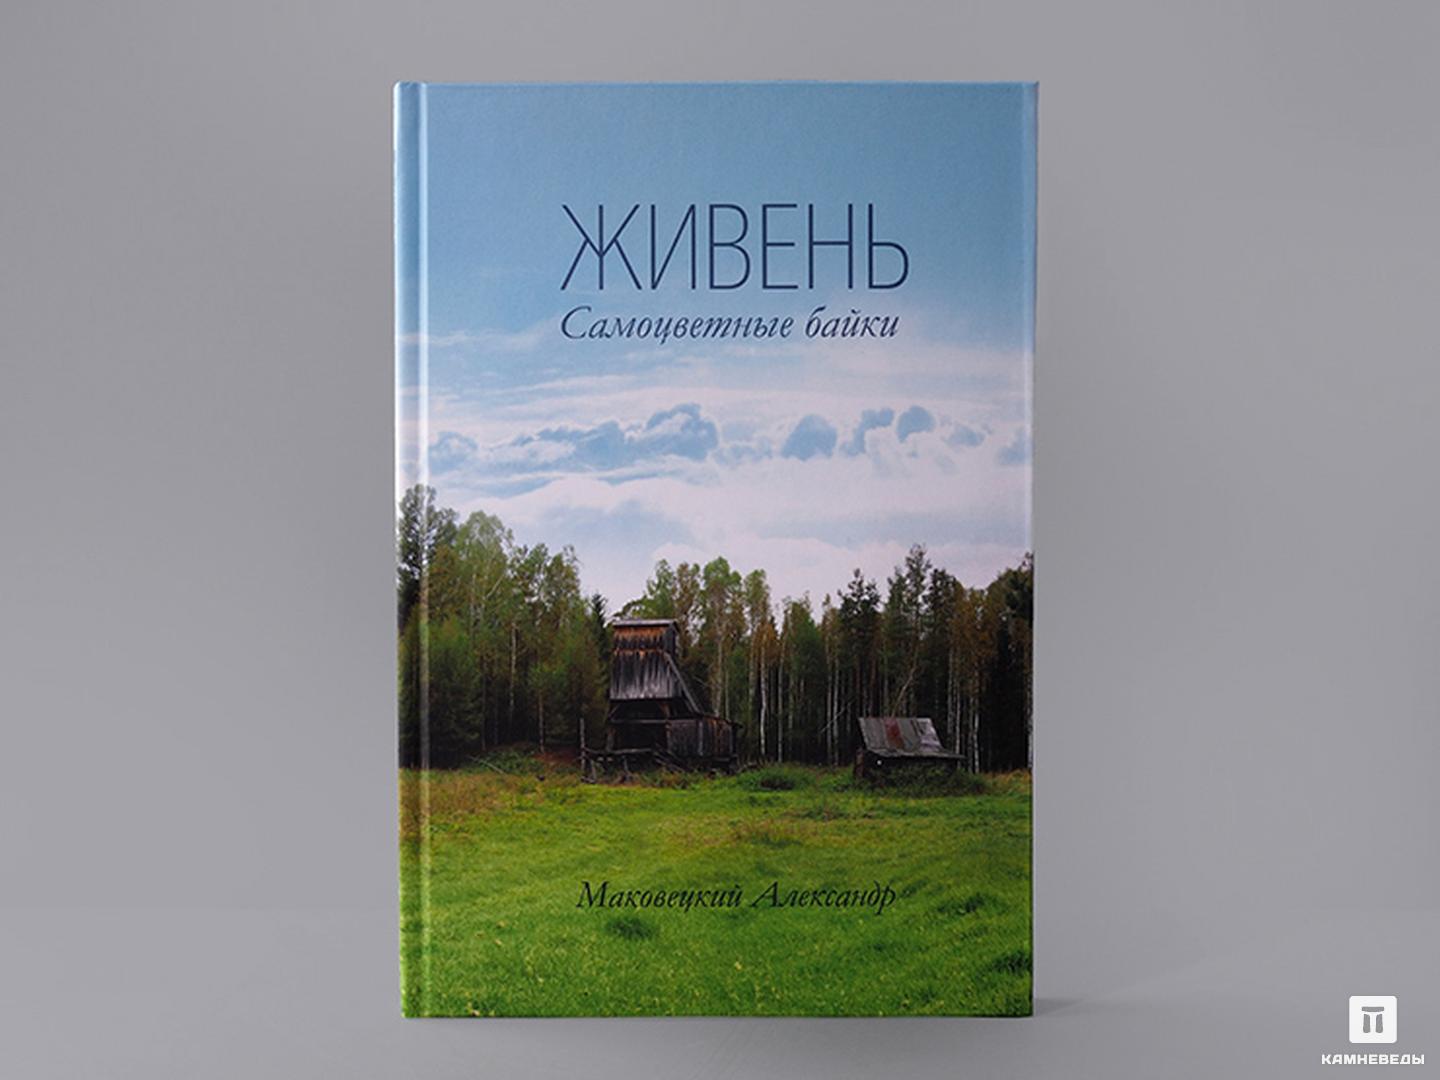 Книга: Маковецкий Александр «Живень. Самоцветные байки» байки на бис